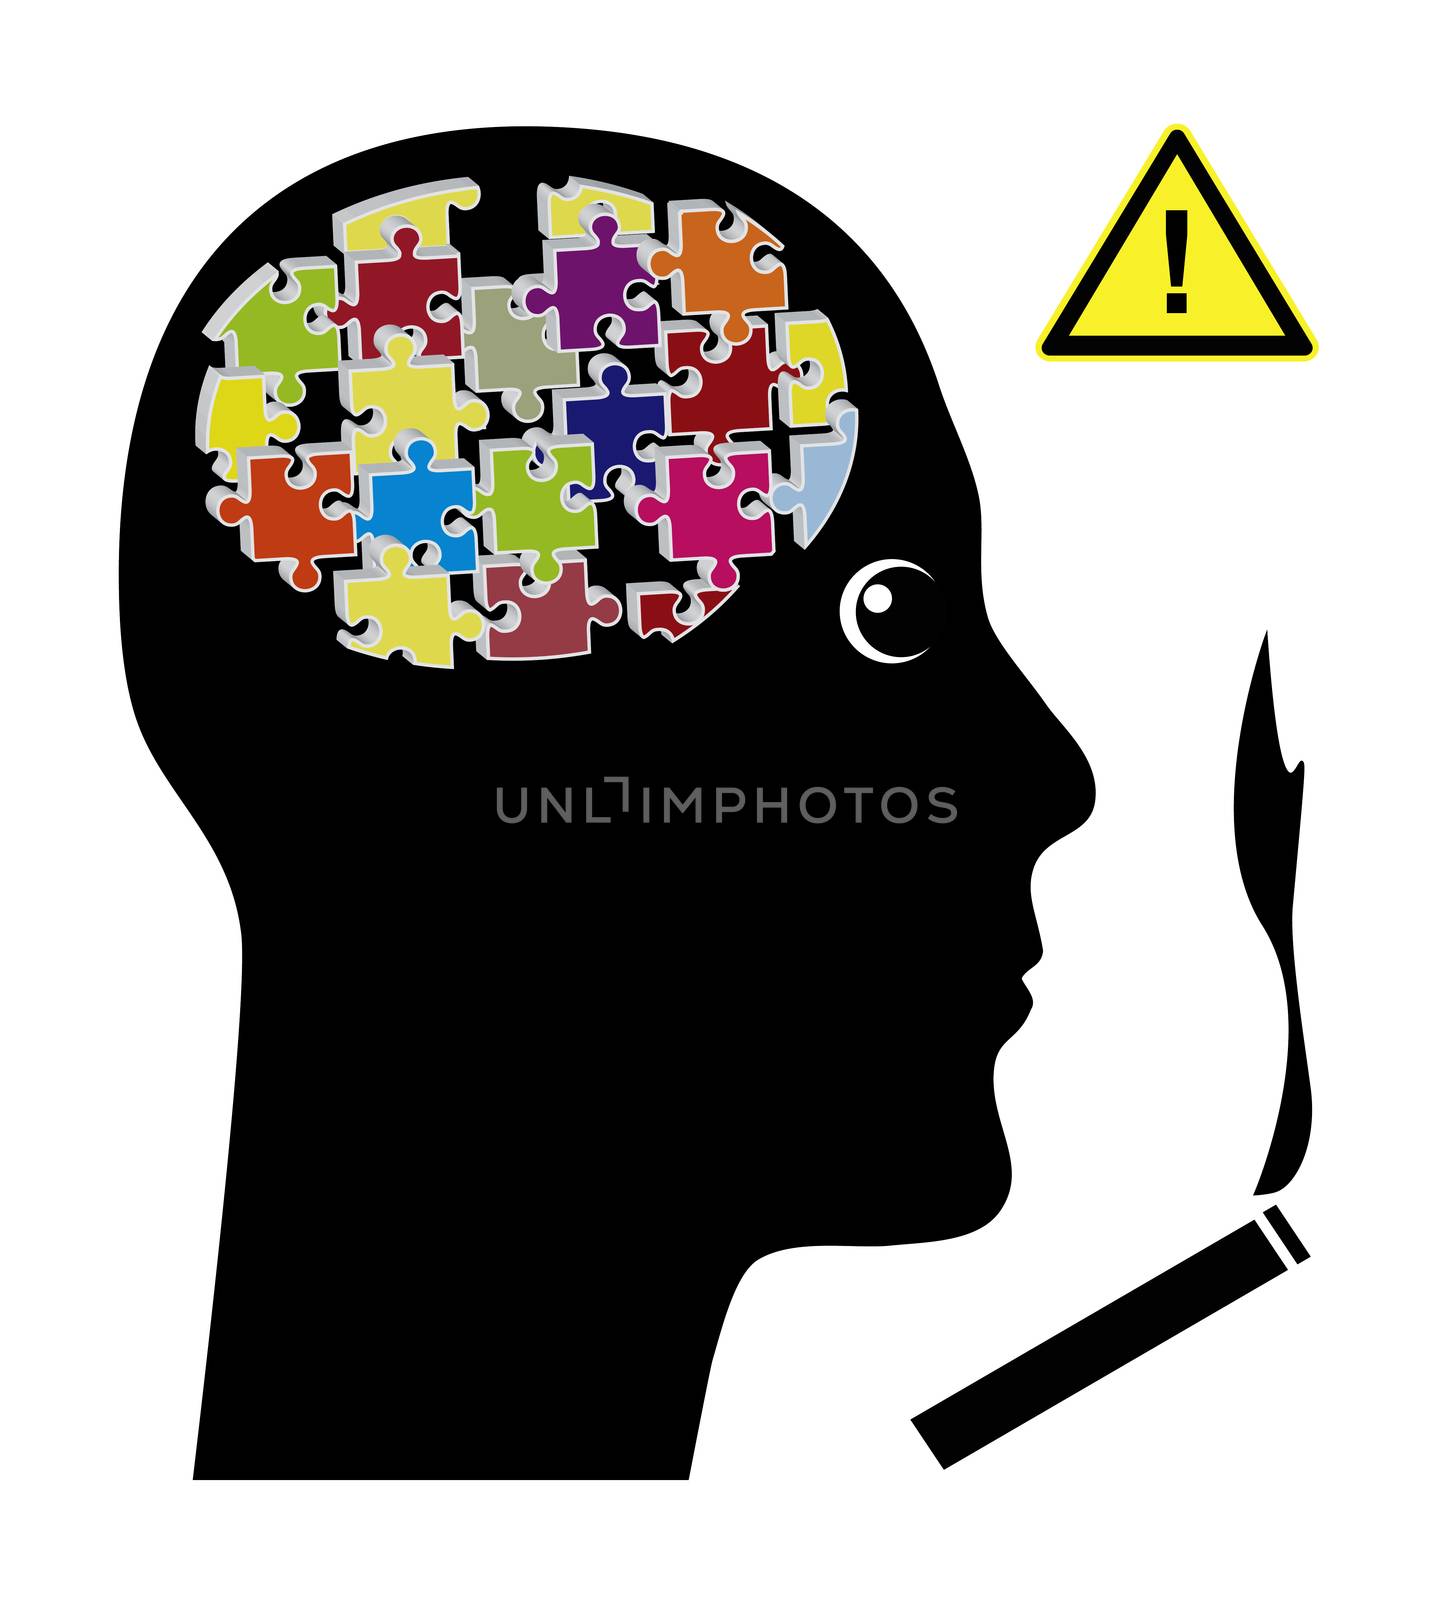 Smoking tobacco causing long term damage to the brain like memory loss or shrinking